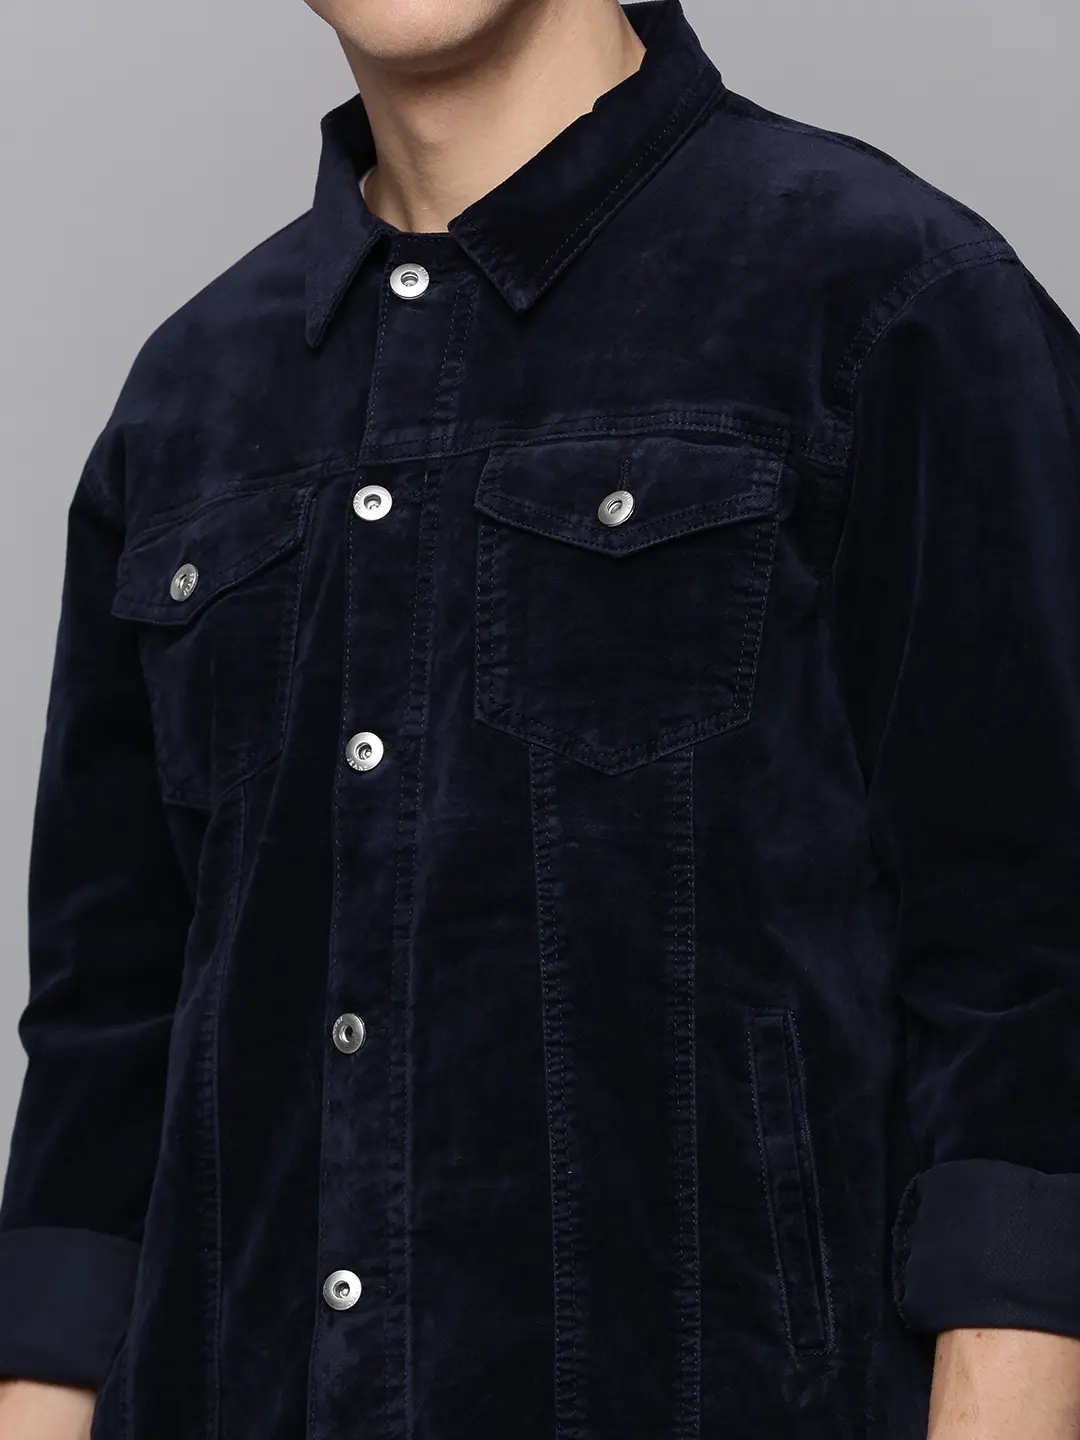 SHOWOFF Men's Spread Collar Navy Blue Solid Open Front Jacket